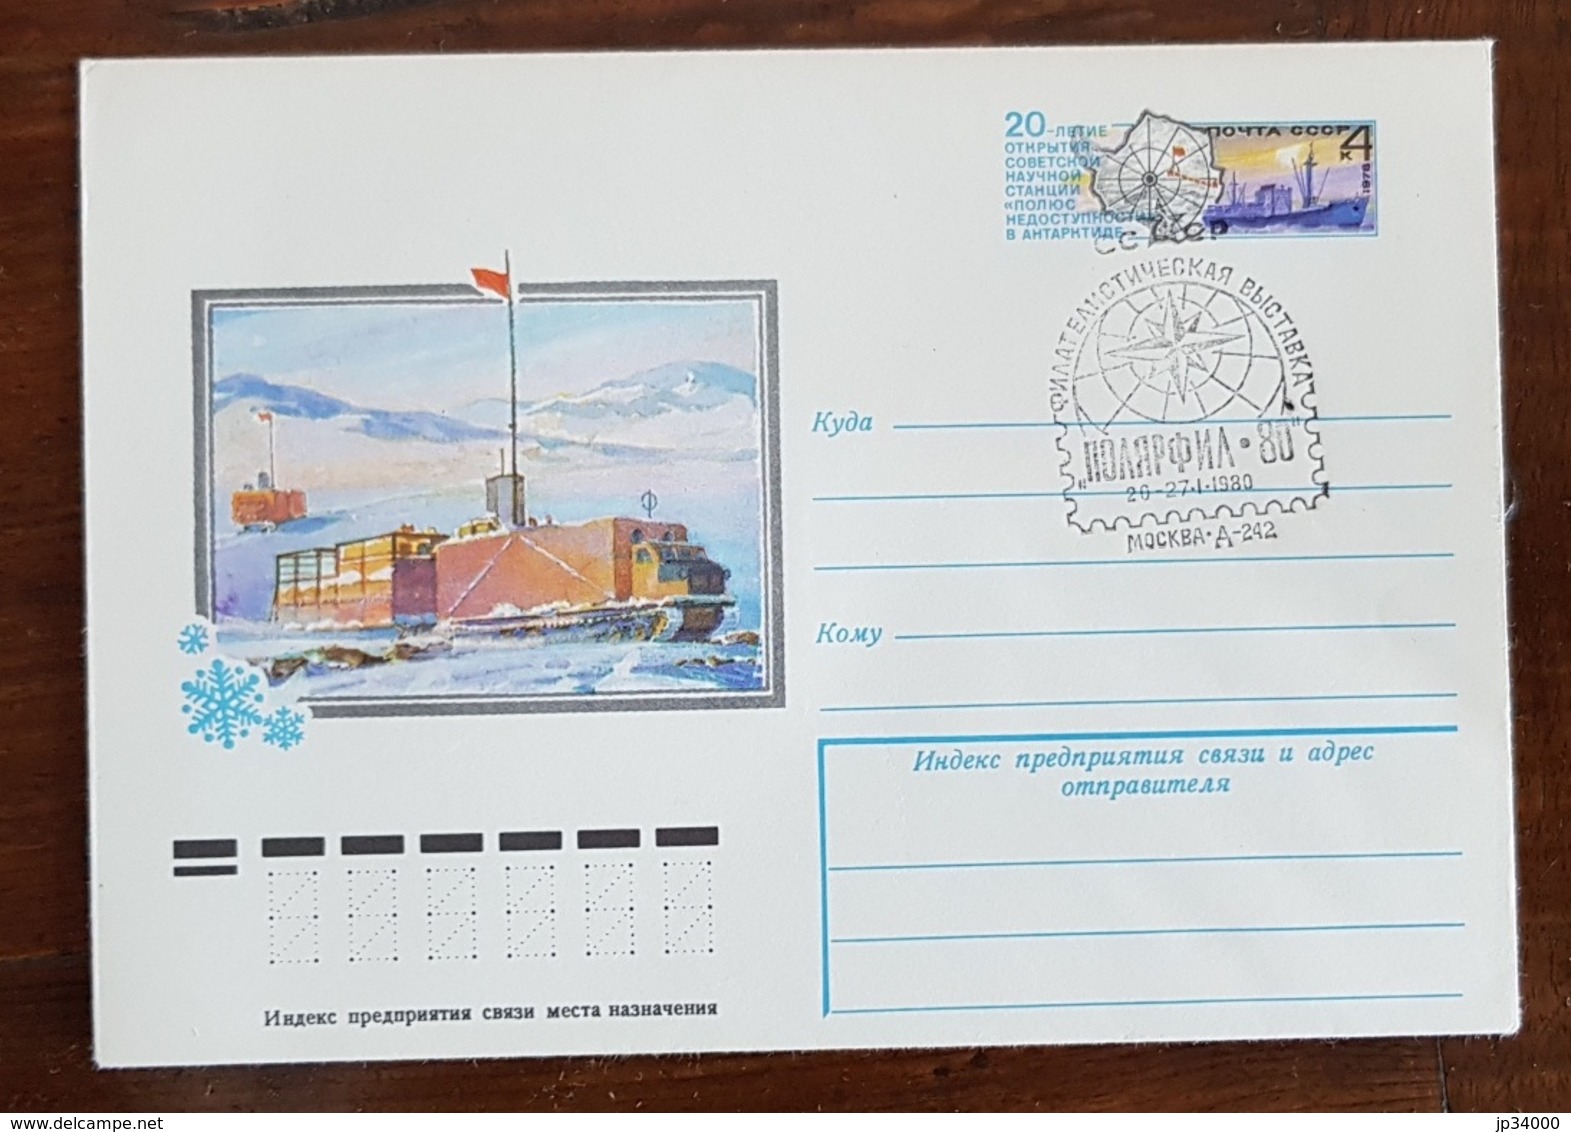 RUSSIE Theme Polaire. 1 Entier Postal Illustré Avec Cachet Illustré 1980 - Programas De Investigación